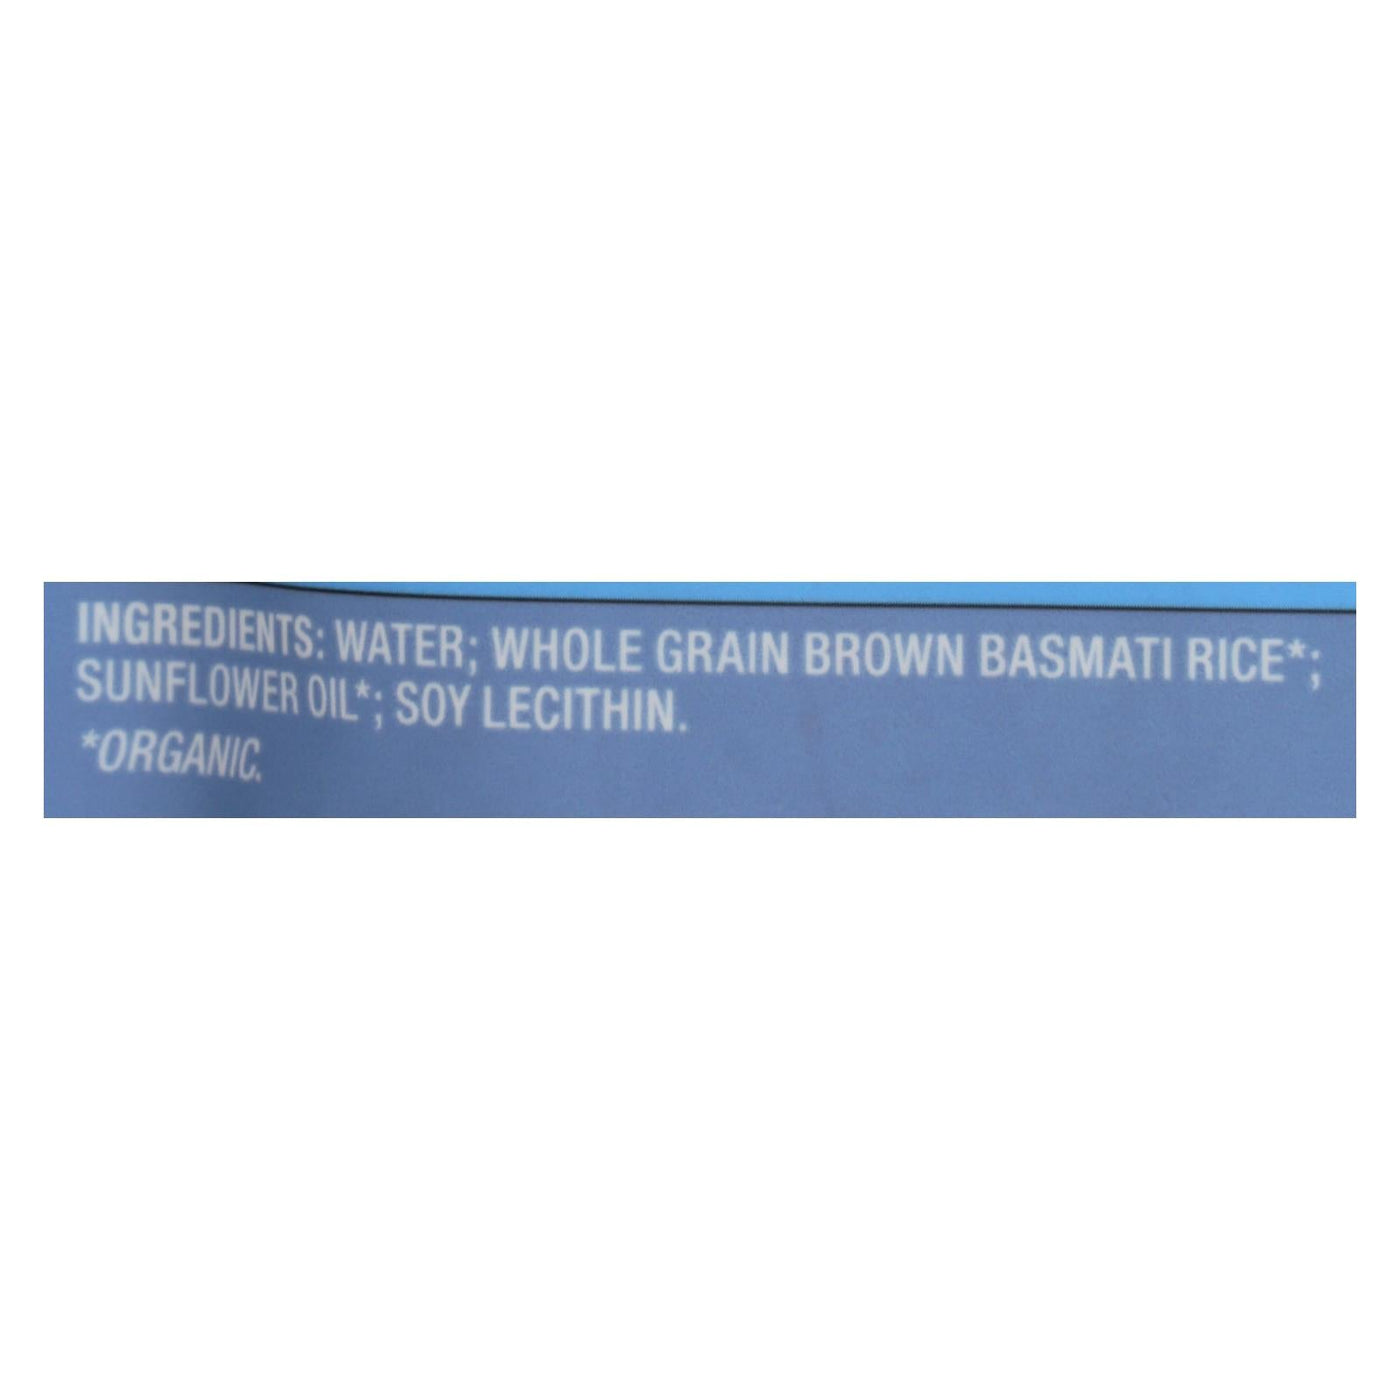 Buy Seeds Of Change Organic Rishikesh Brown Basmati Rice - Case Of 12 - 8.5 Oz.  at OnlyNaturals.us